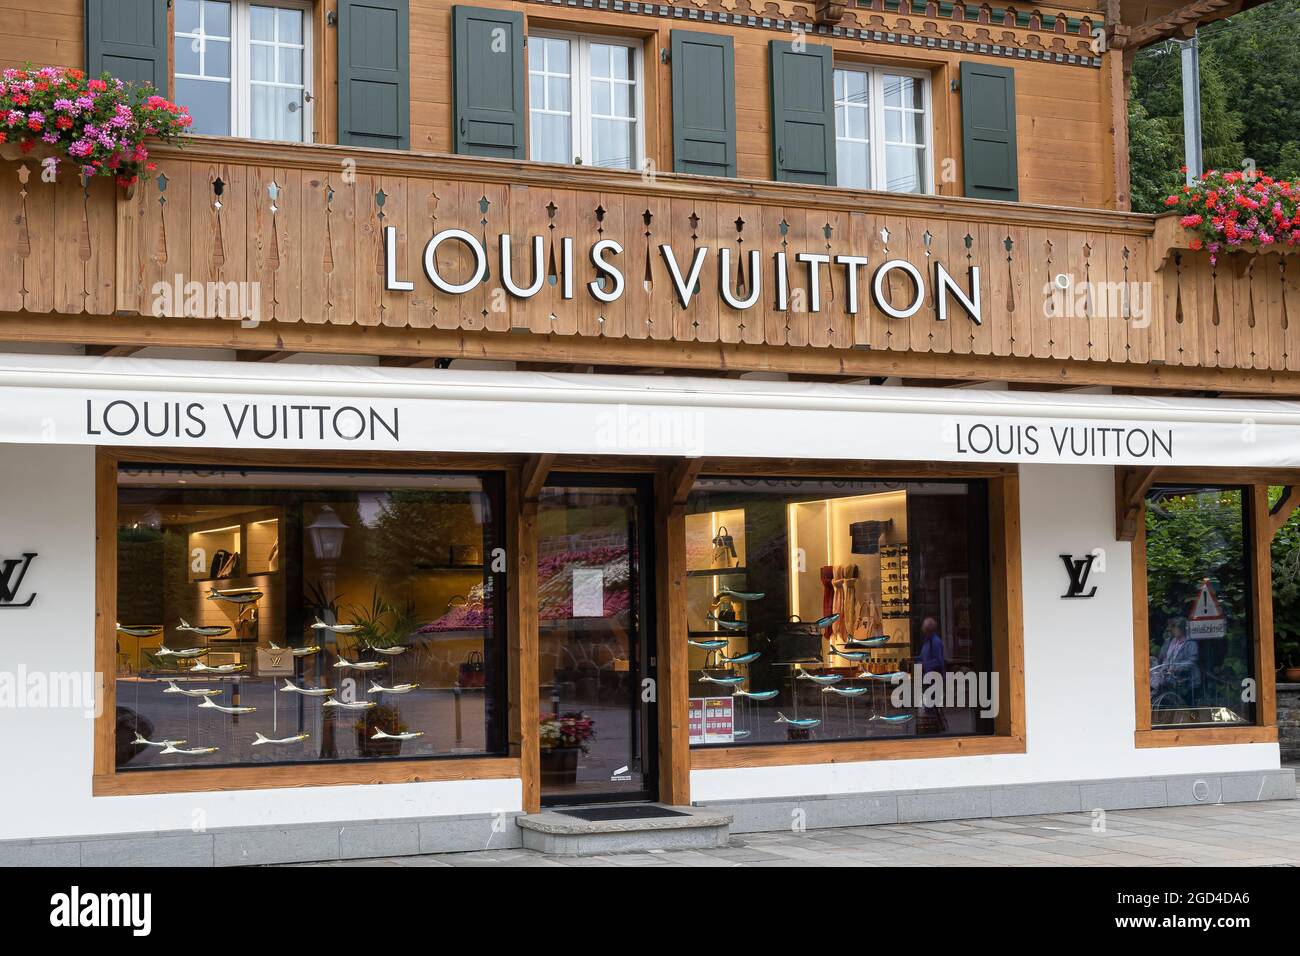 ᴊ'ᴀᴅɪᴏʀ on X: Louis Vuitton store in Gstaad, Switzerland